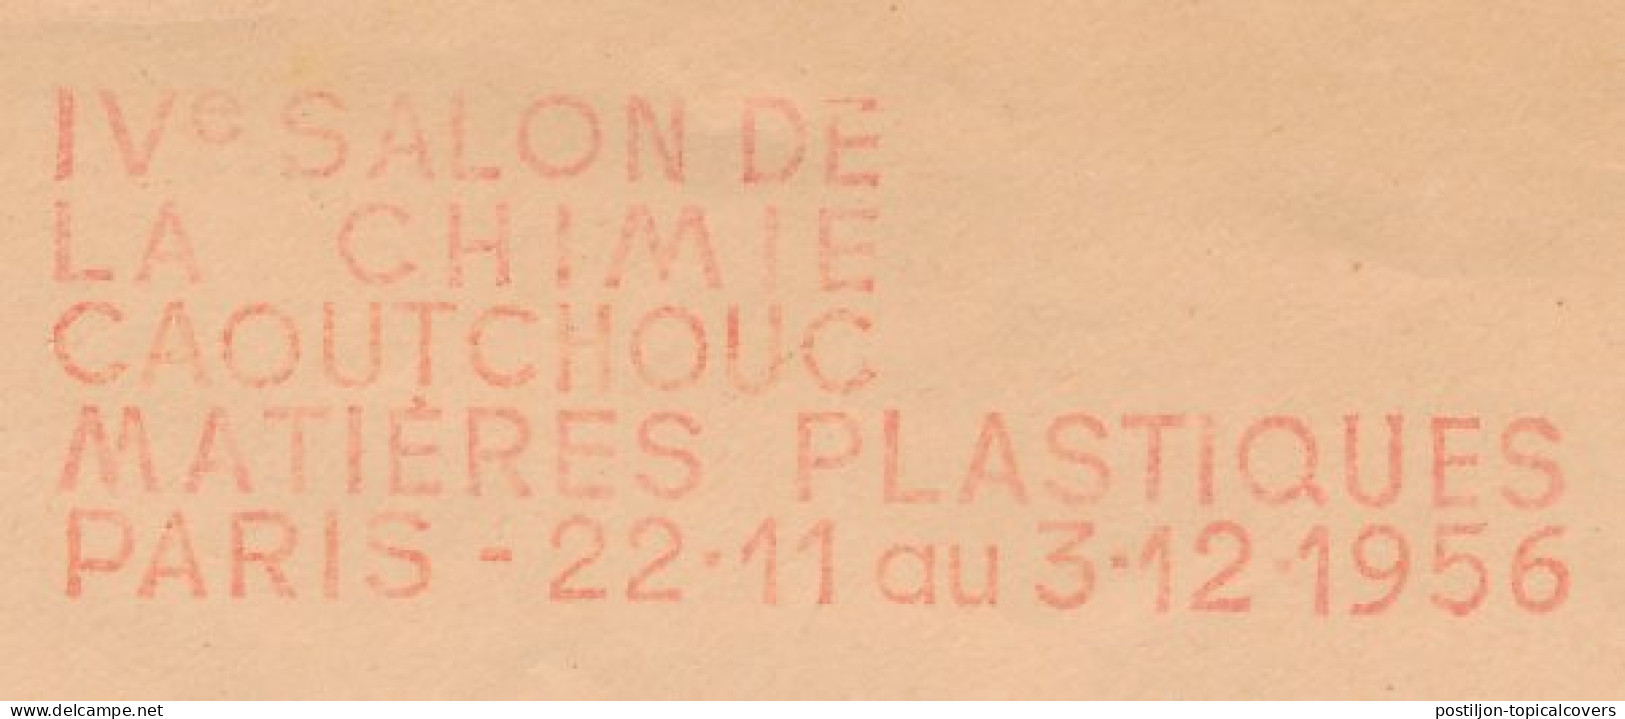 Meter Cover France 1956 Chemistry Exhibition - Rubber - Plastics - Chemistry